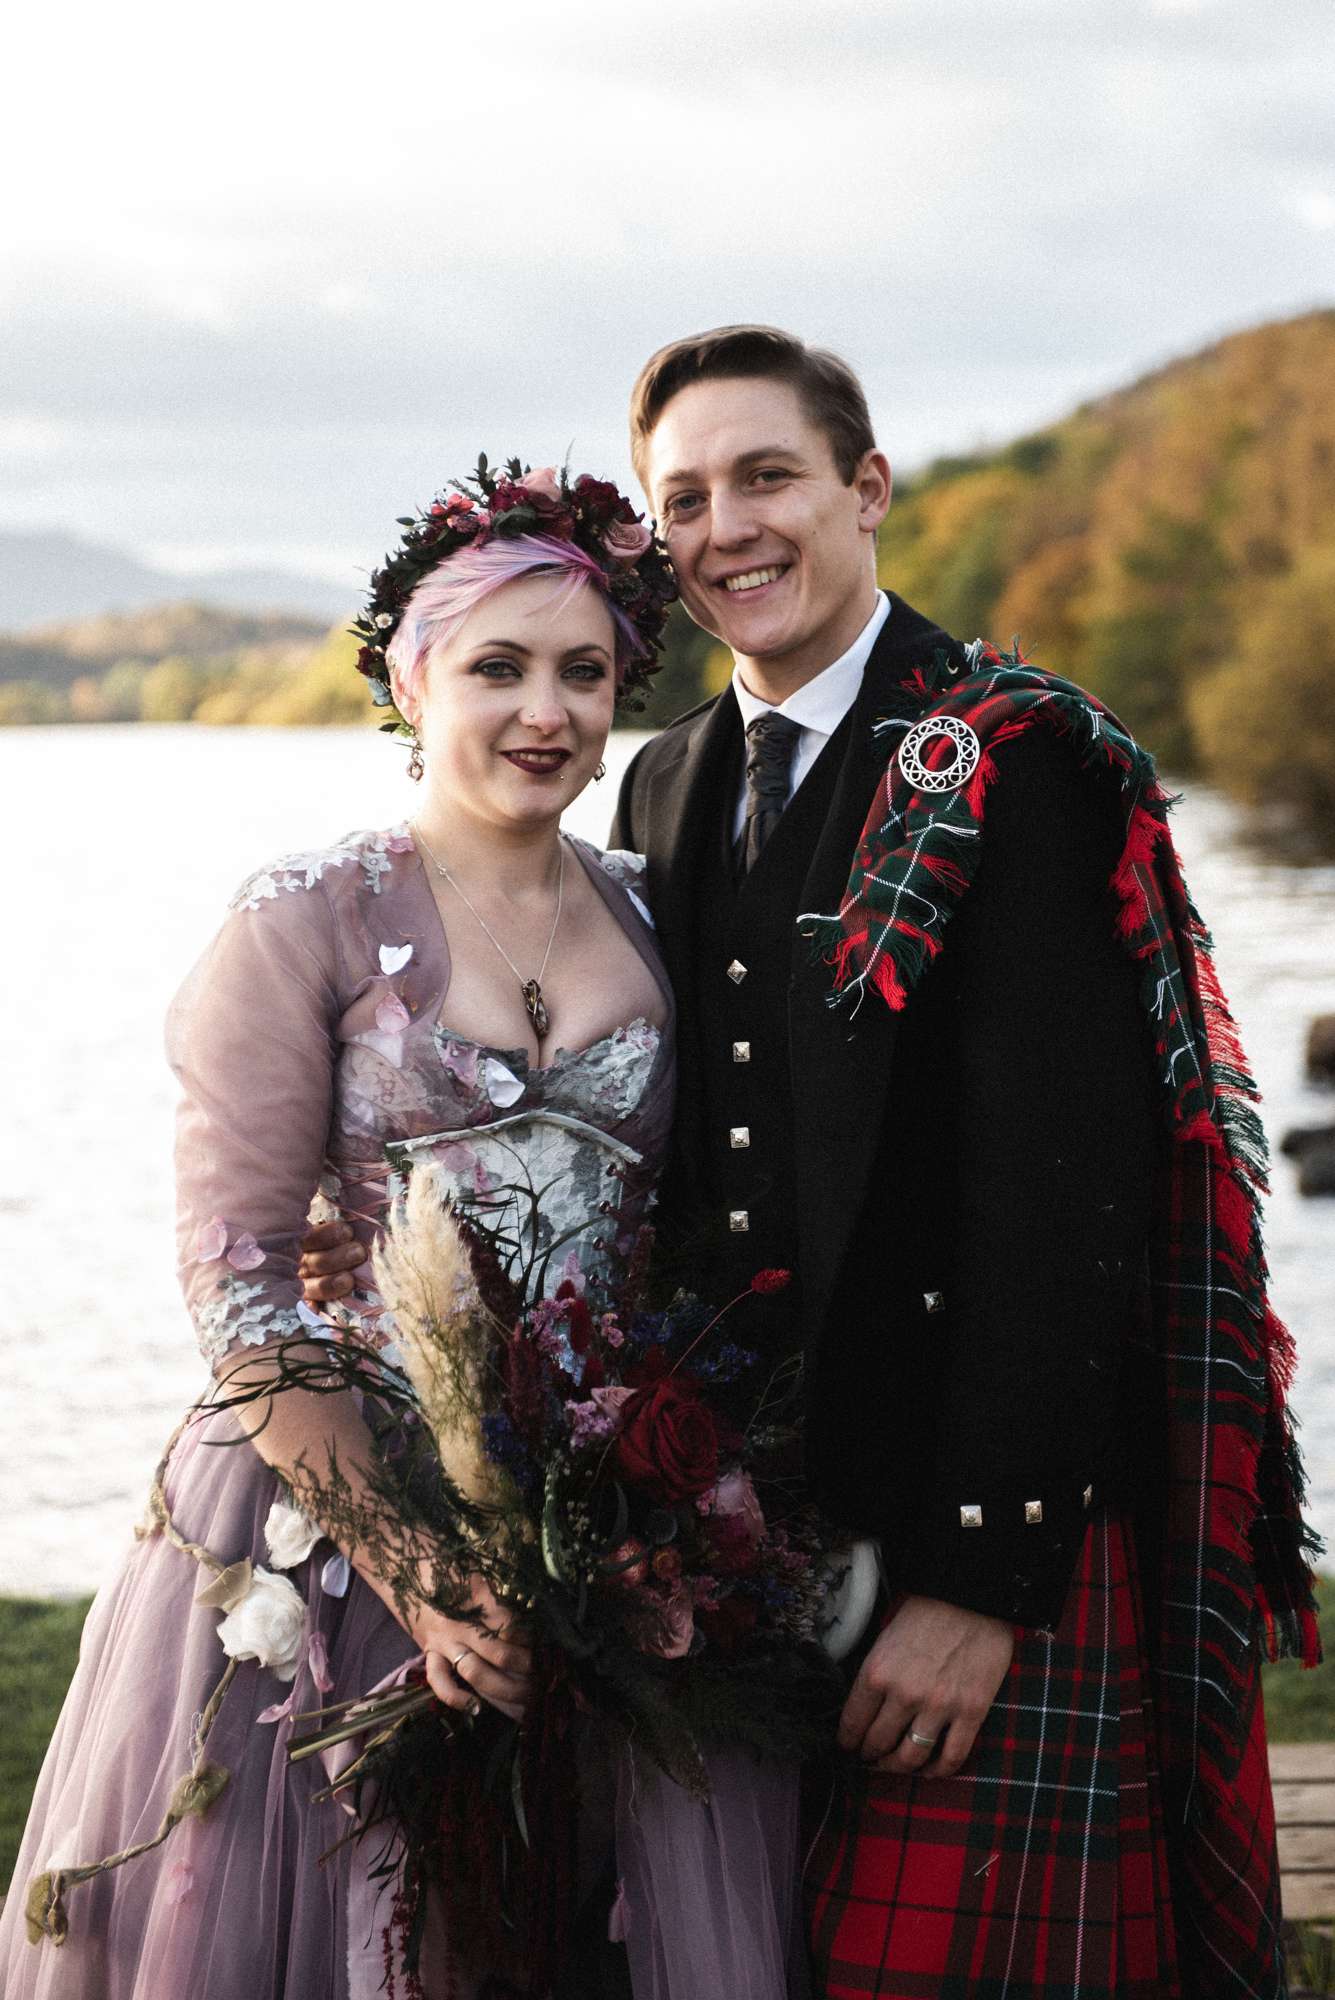 Fairytales in DIY: A Purple Themed October Loch Wedding · Rock n Roll Bride